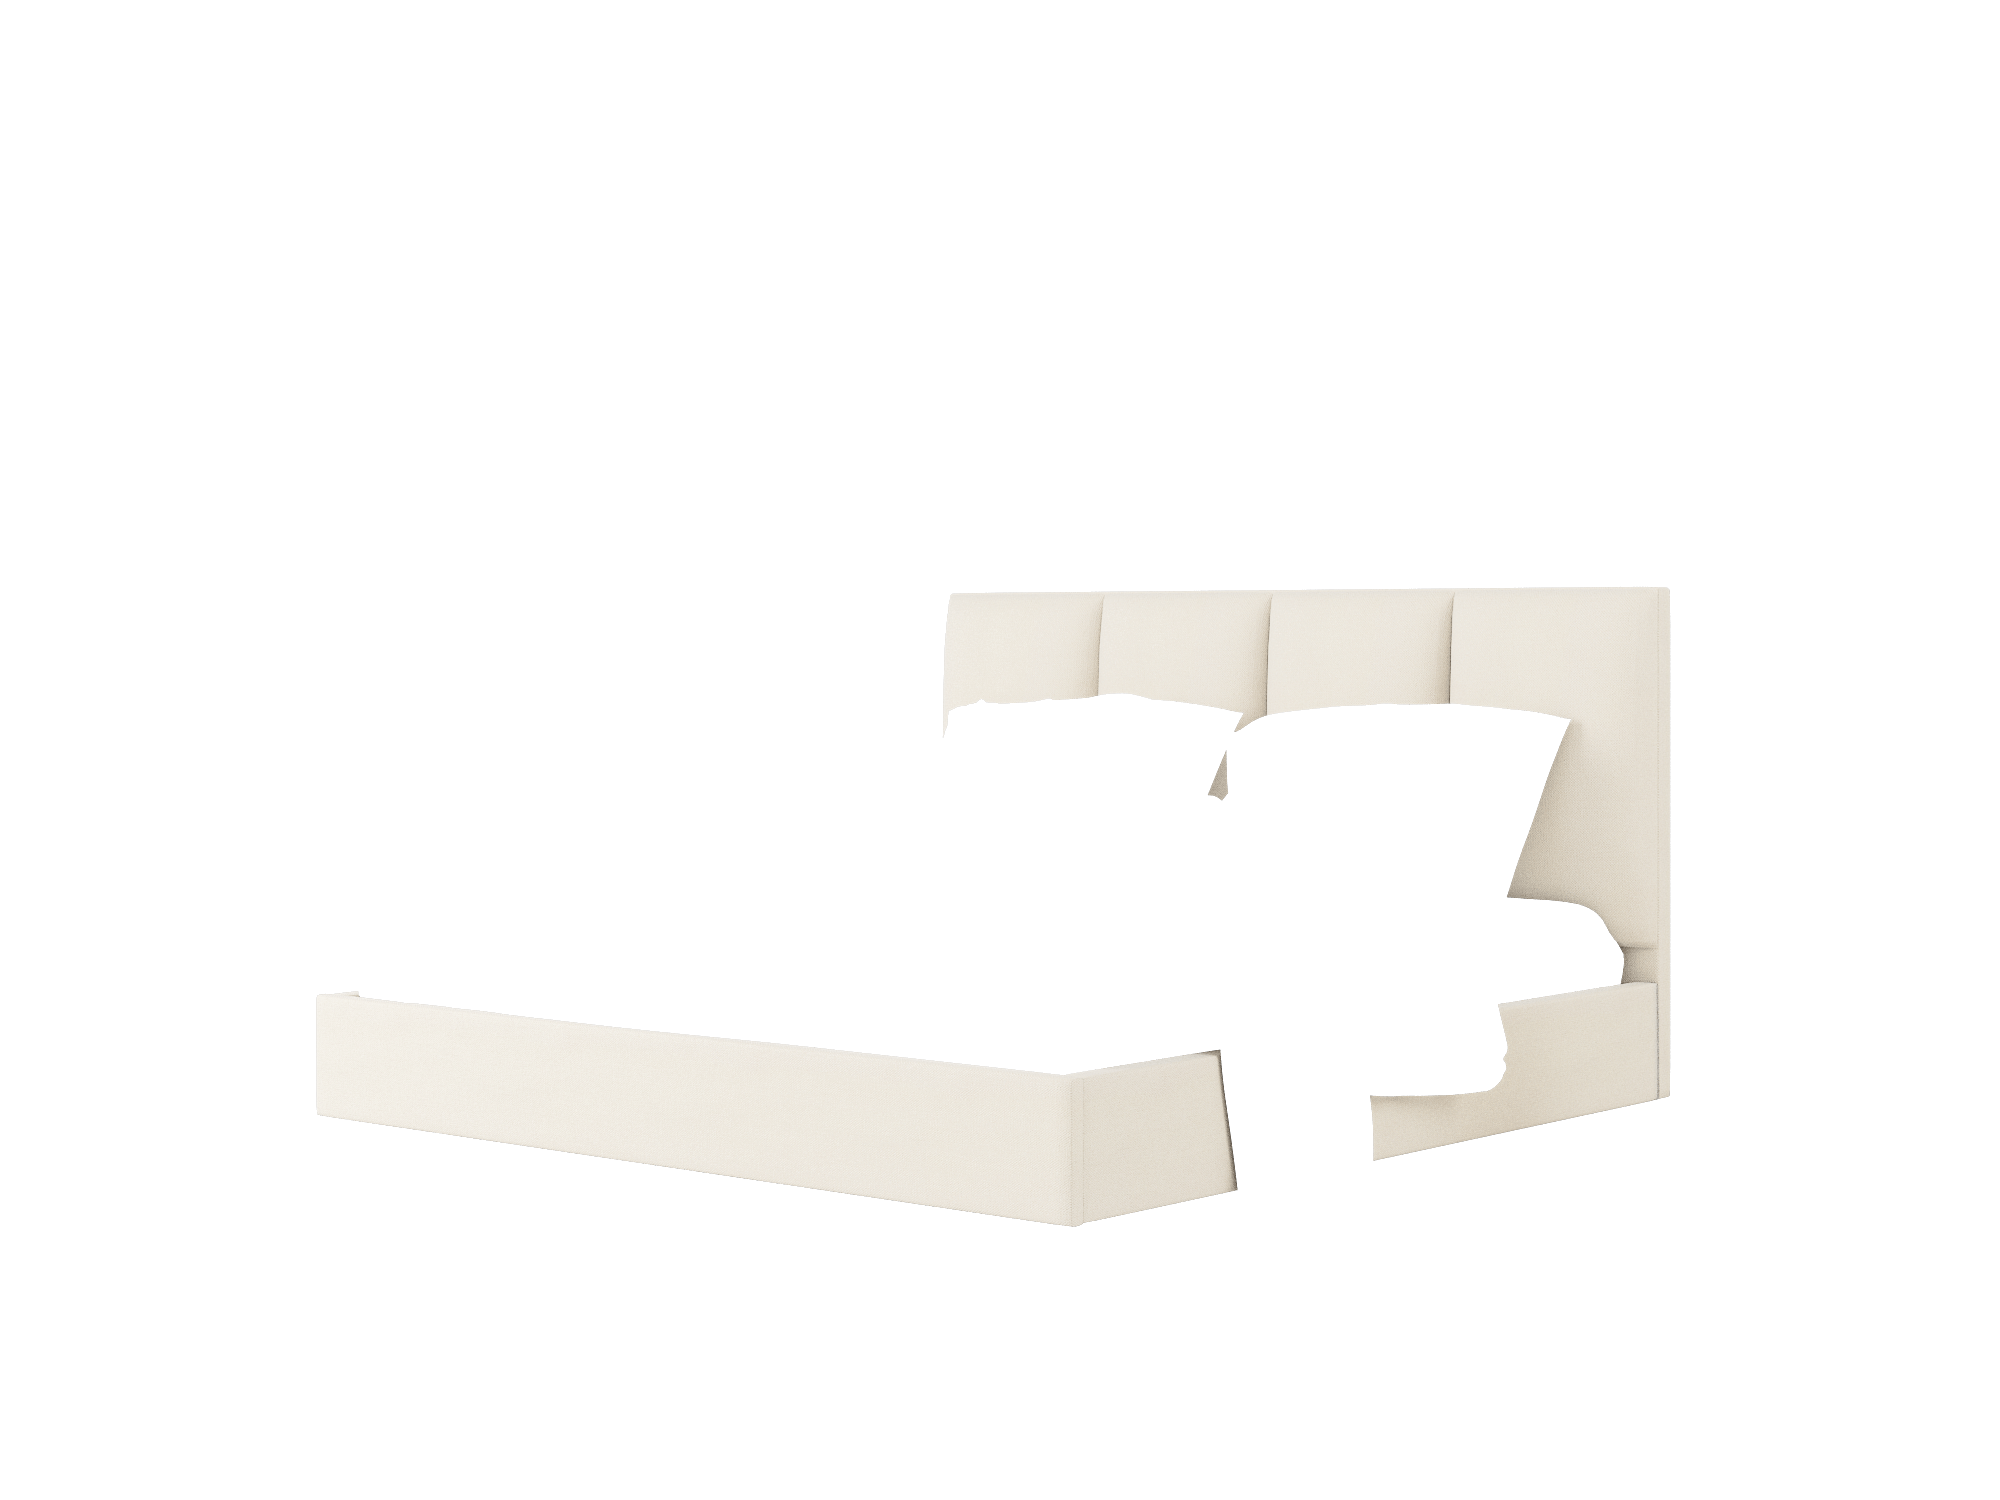 Celine Malibu Linen Bed King Room Texture